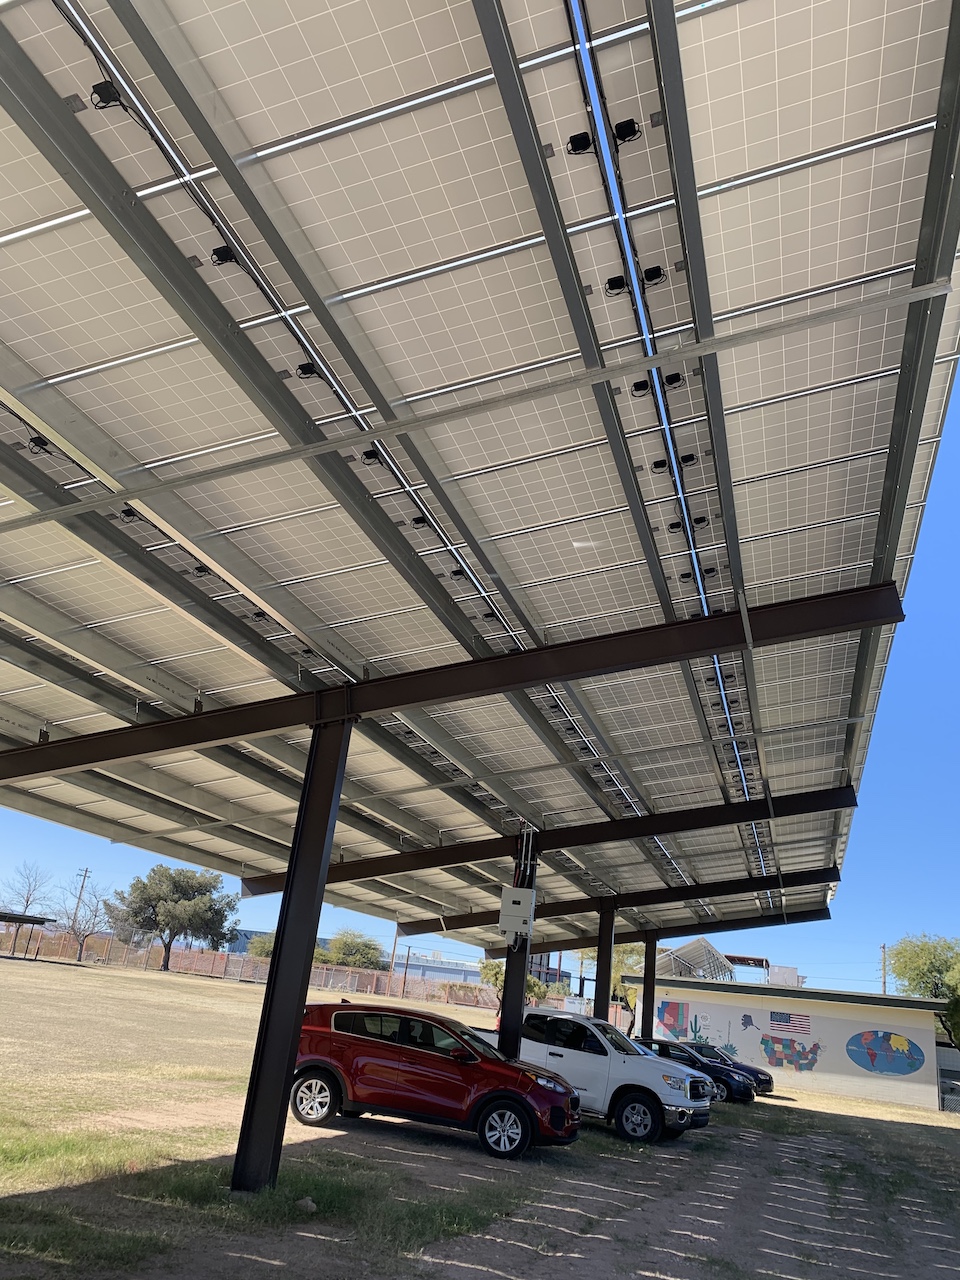 Solar Carports - TraDitional Solar Carports Dual CantileverT Canopies HeaD To HeaD Parking 2